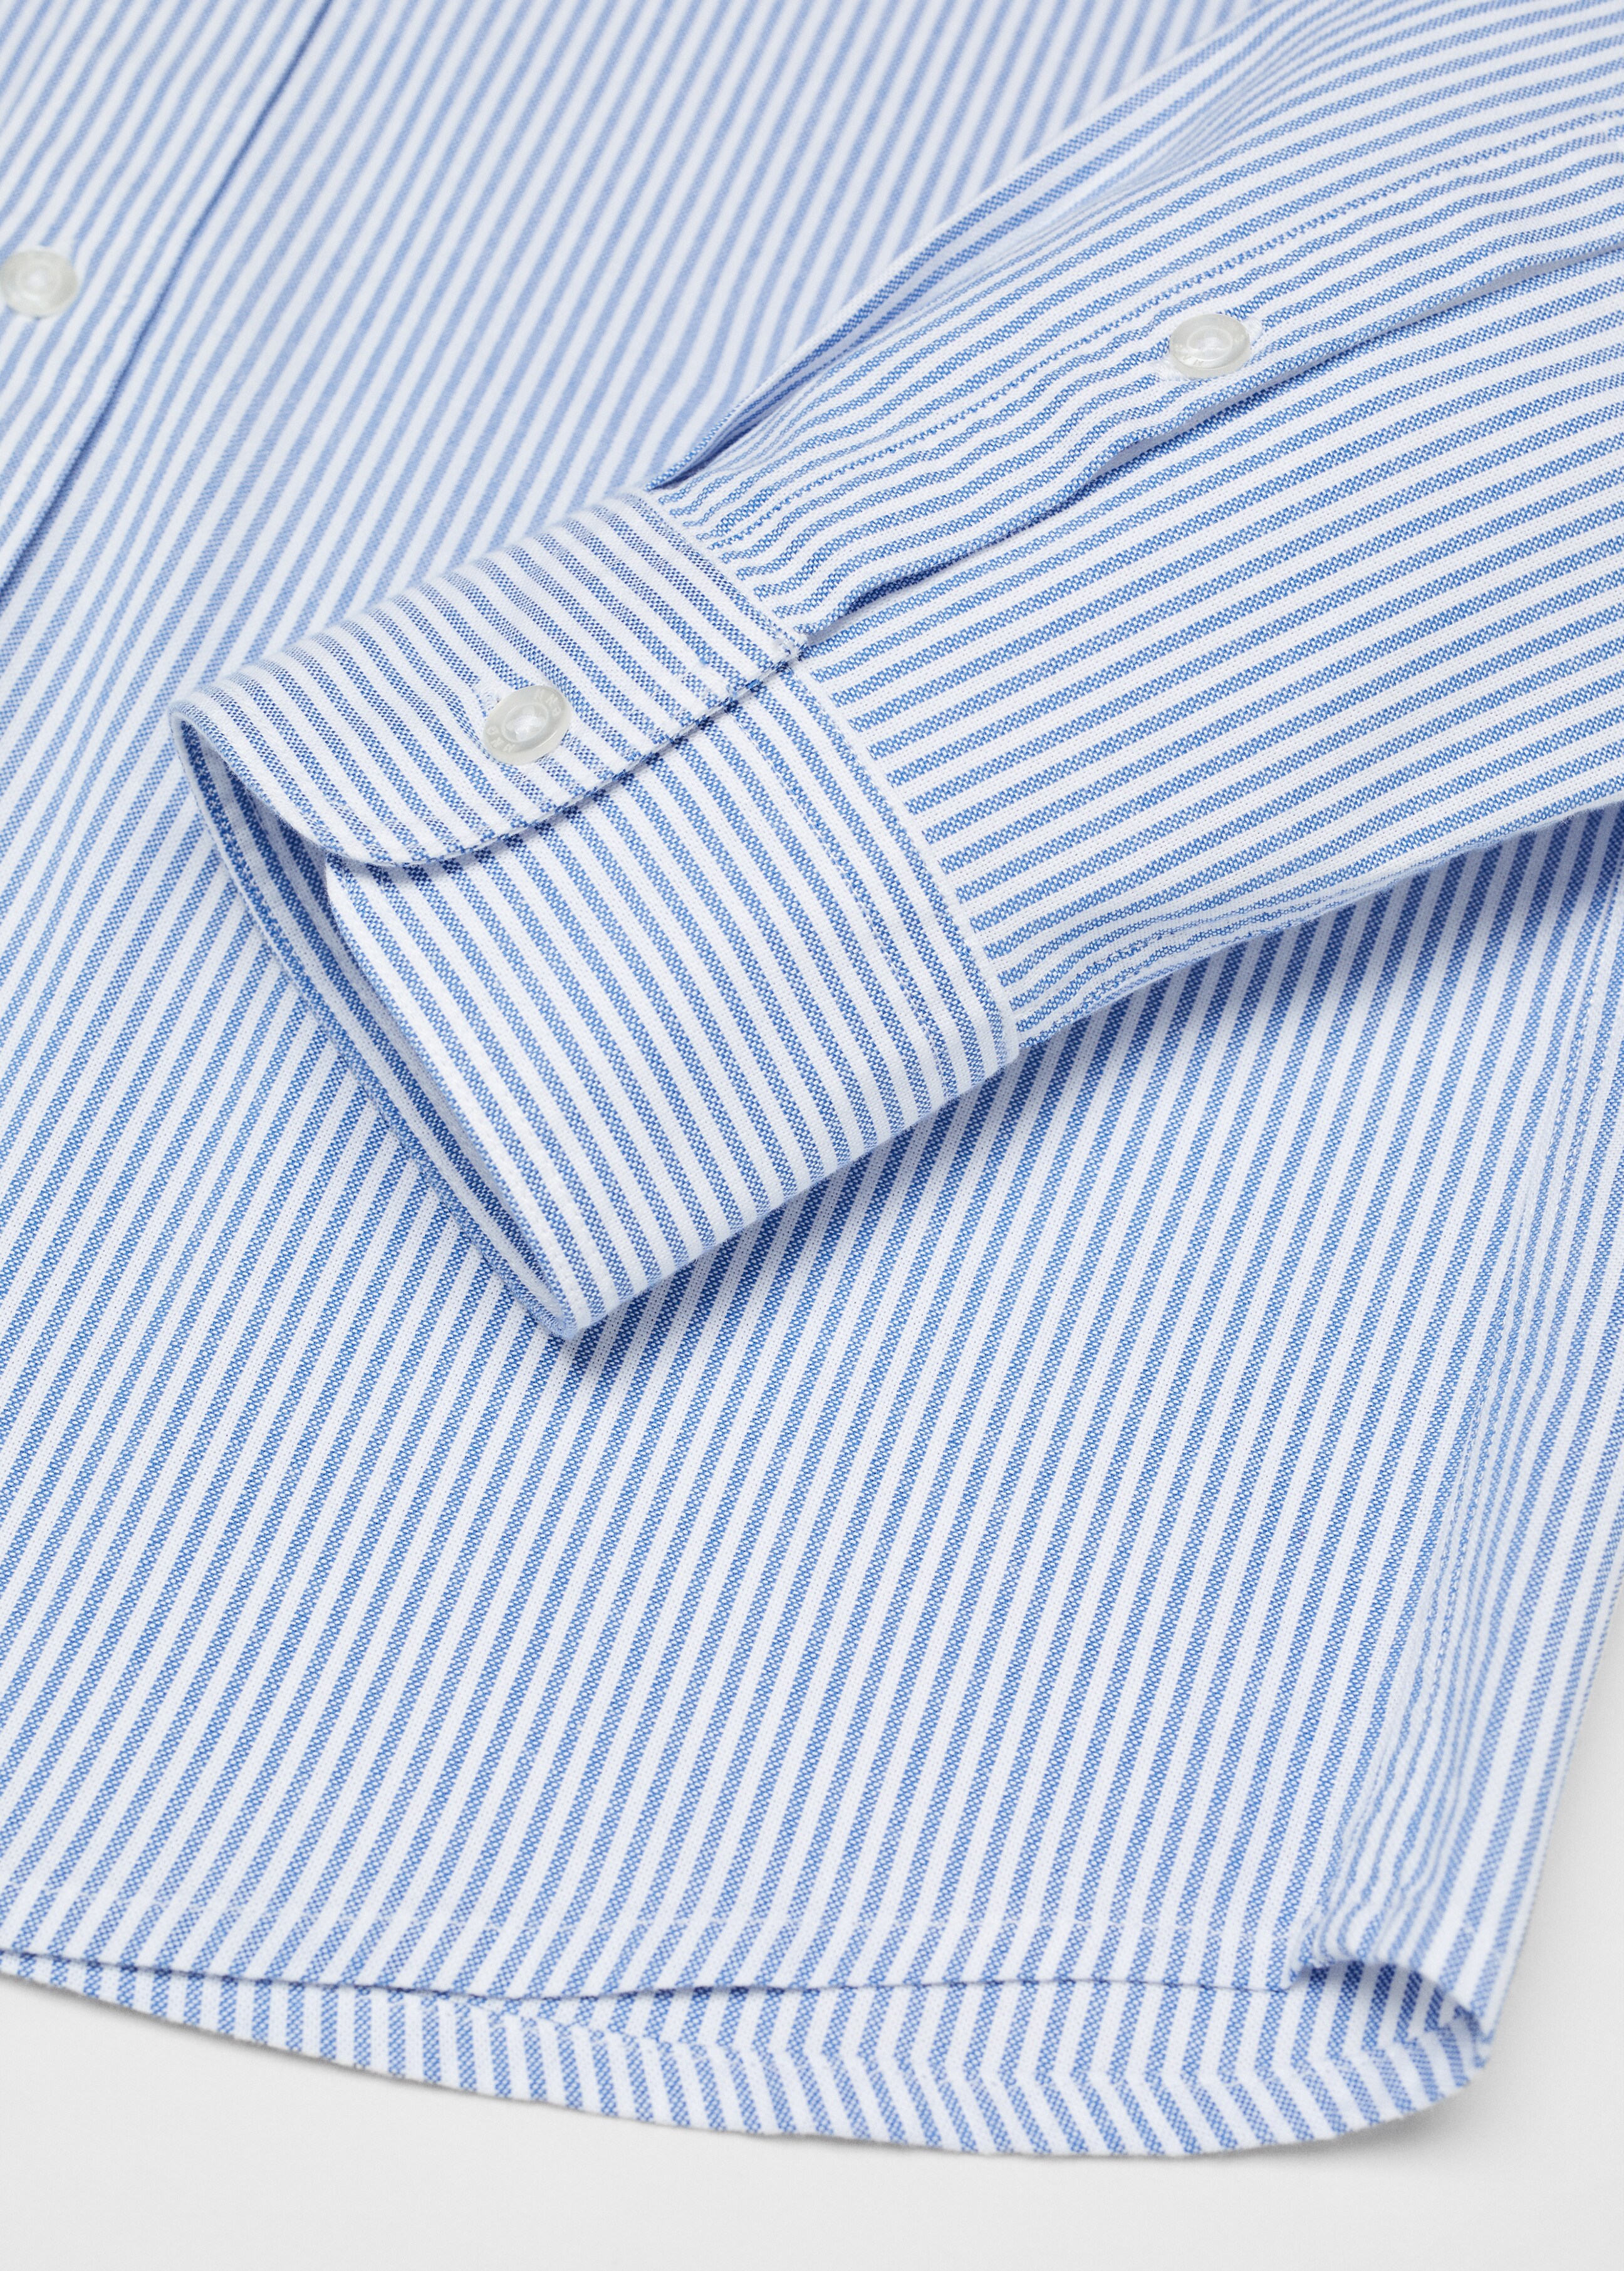 100% cotton kodak striped shirt - Details of the article 8